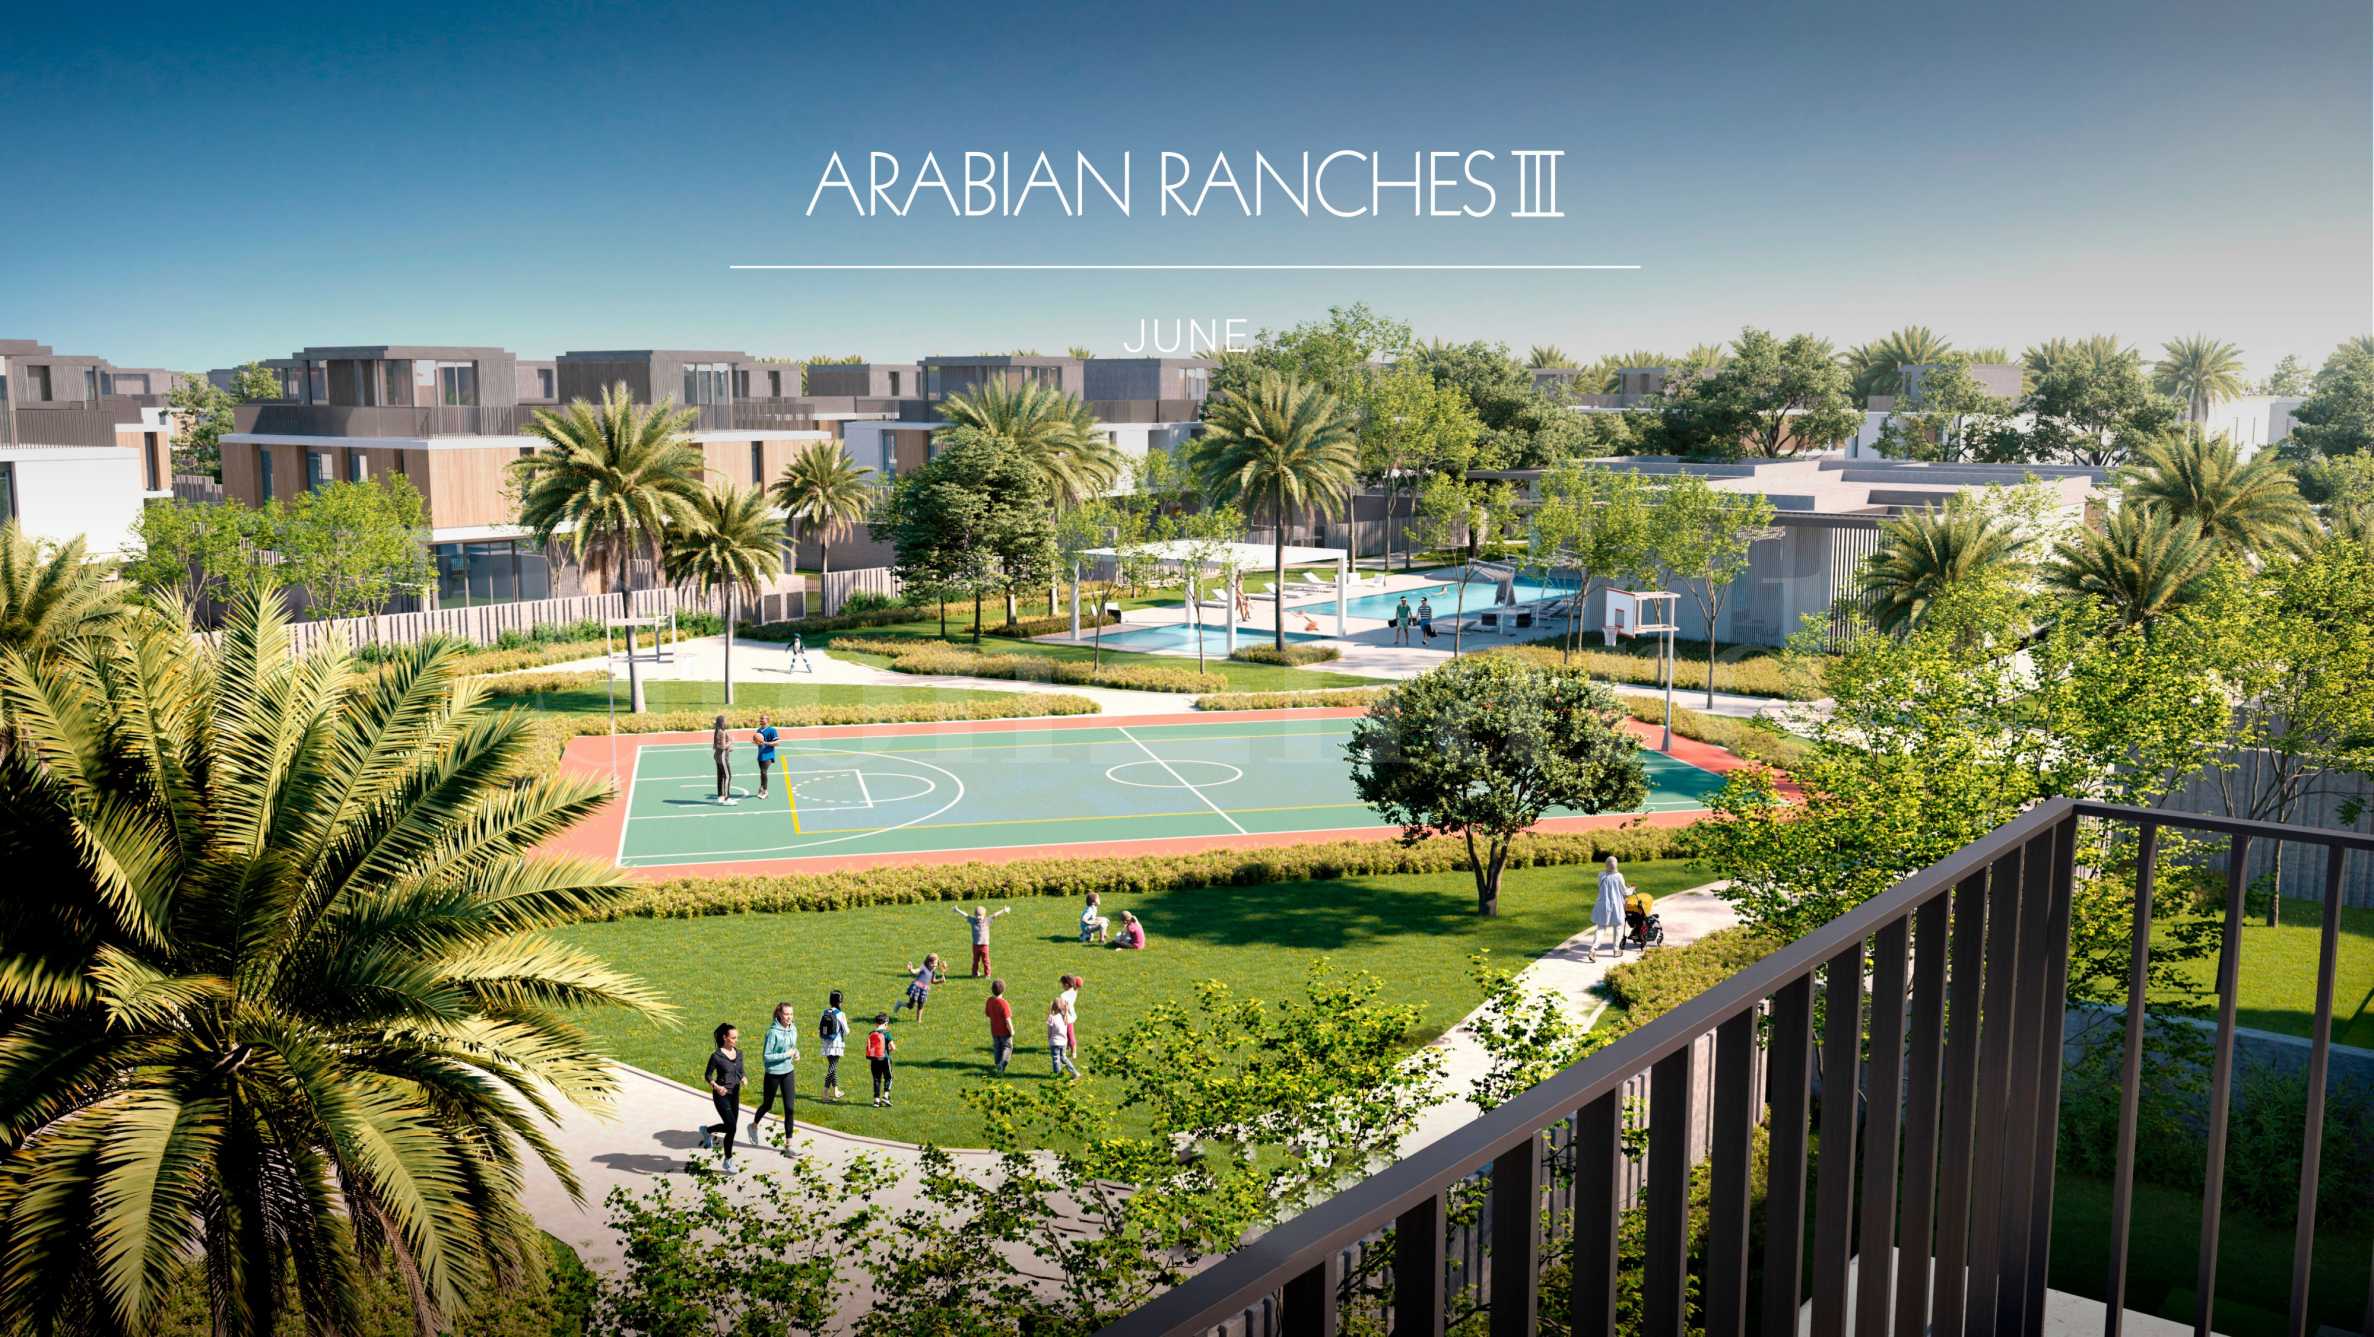 Villas for sale in June, Arabian Ranches III1 - Stonehard